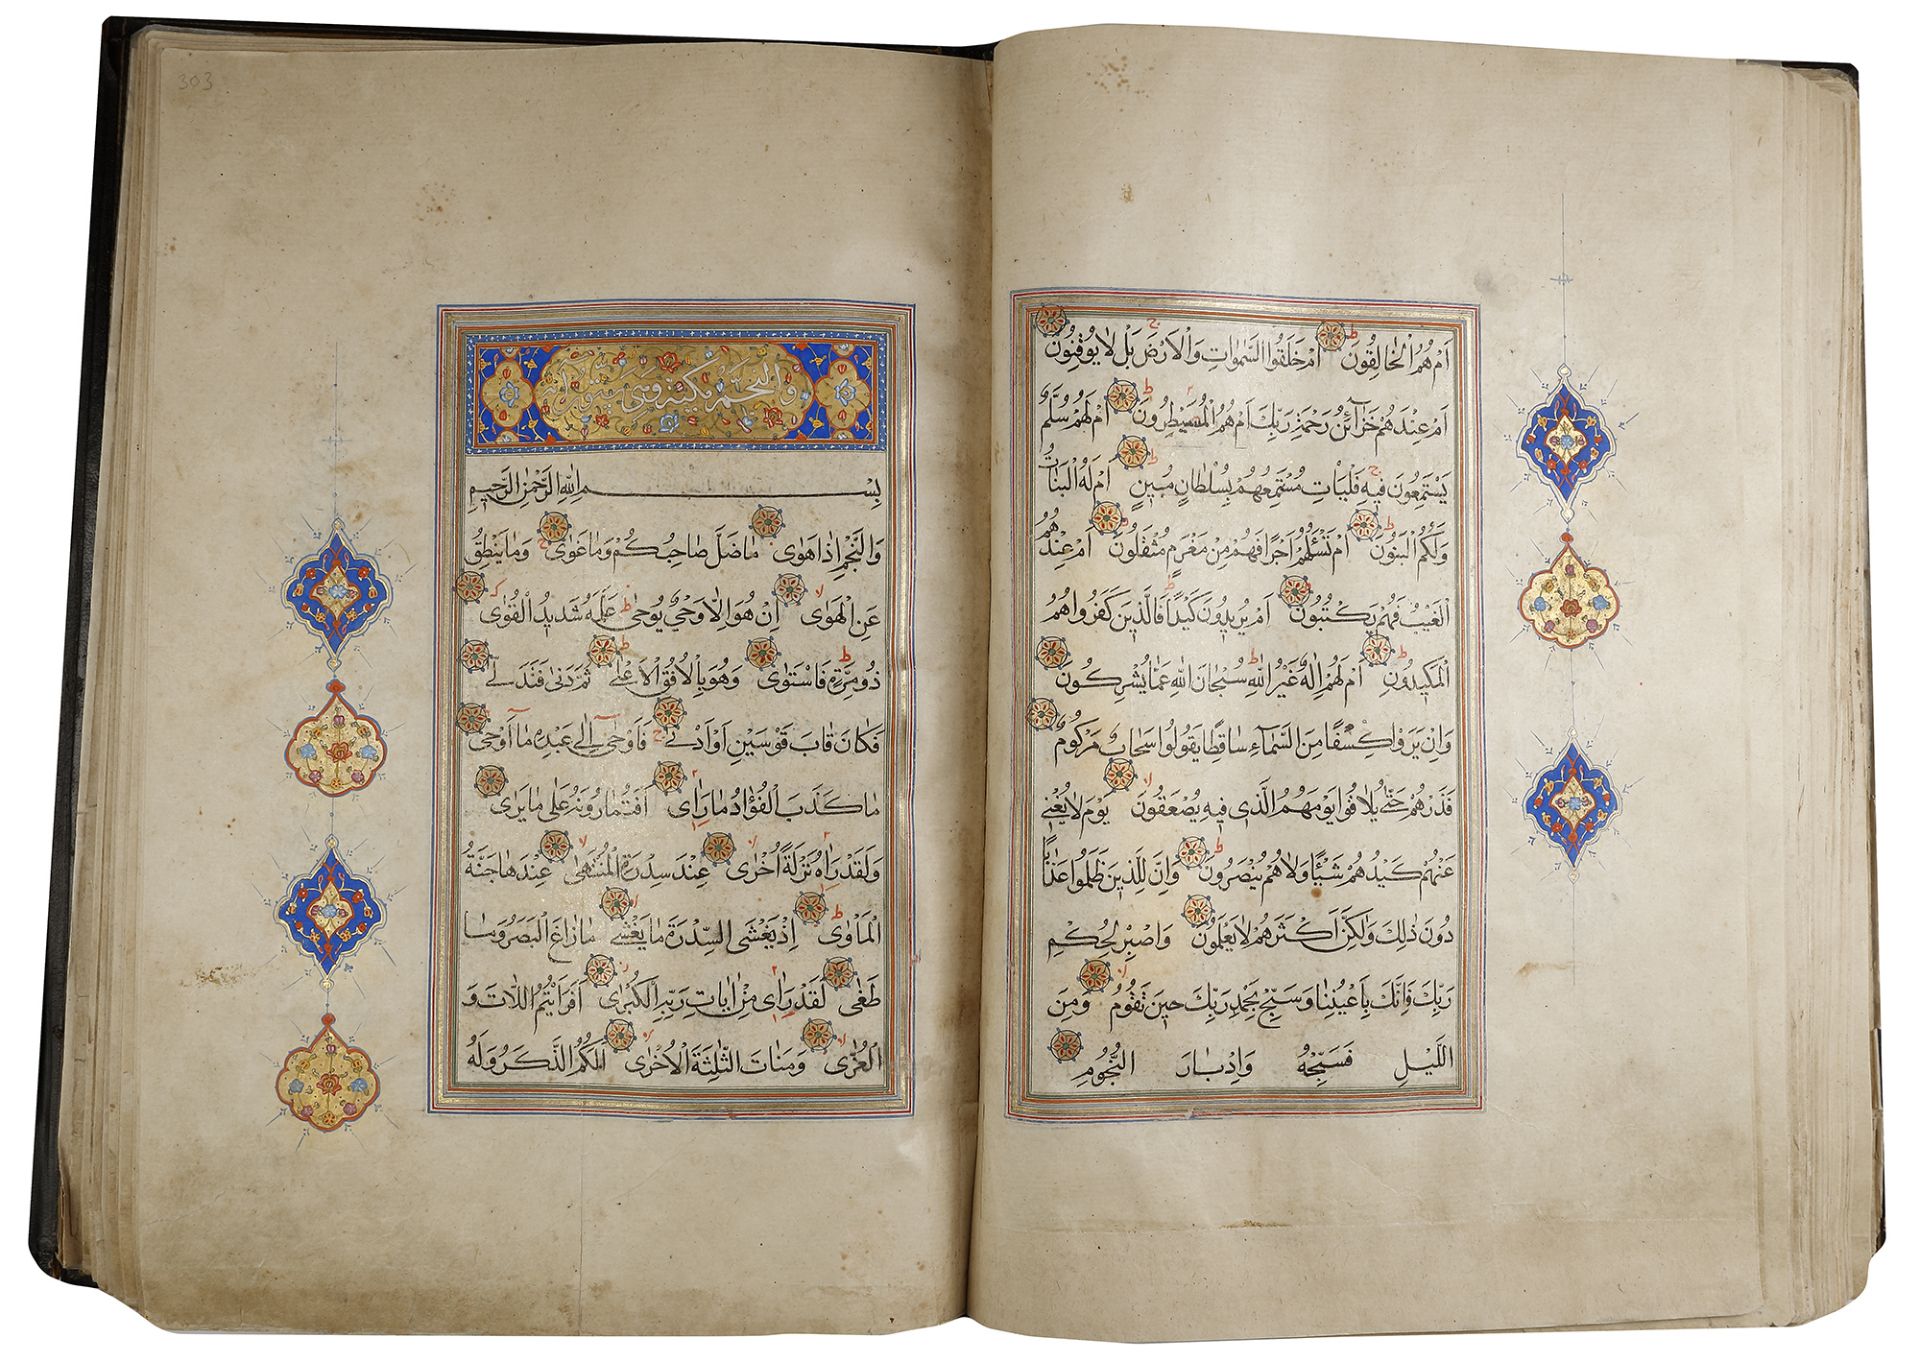 A LARGE ILLUMINATED QURAN, COPIED BY 'ALA'-AL-DIN MUHAMMAD AL-TABRIZI SAFAVID, PERSIA, 16TH CENT - Image 17 of 26